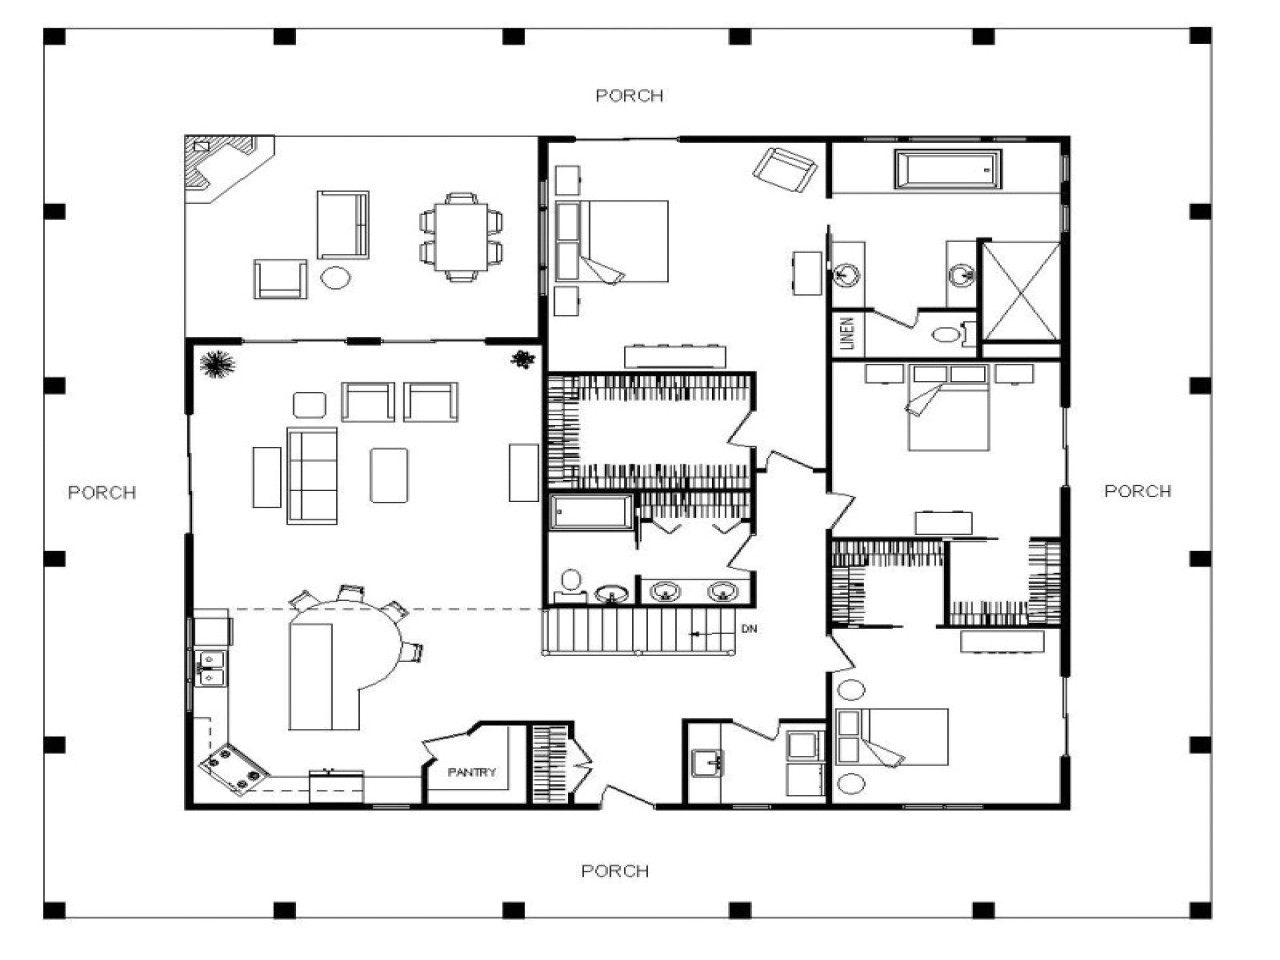 2500 Sq Ft House Plans with Wrap Around Porch | plougonver.com